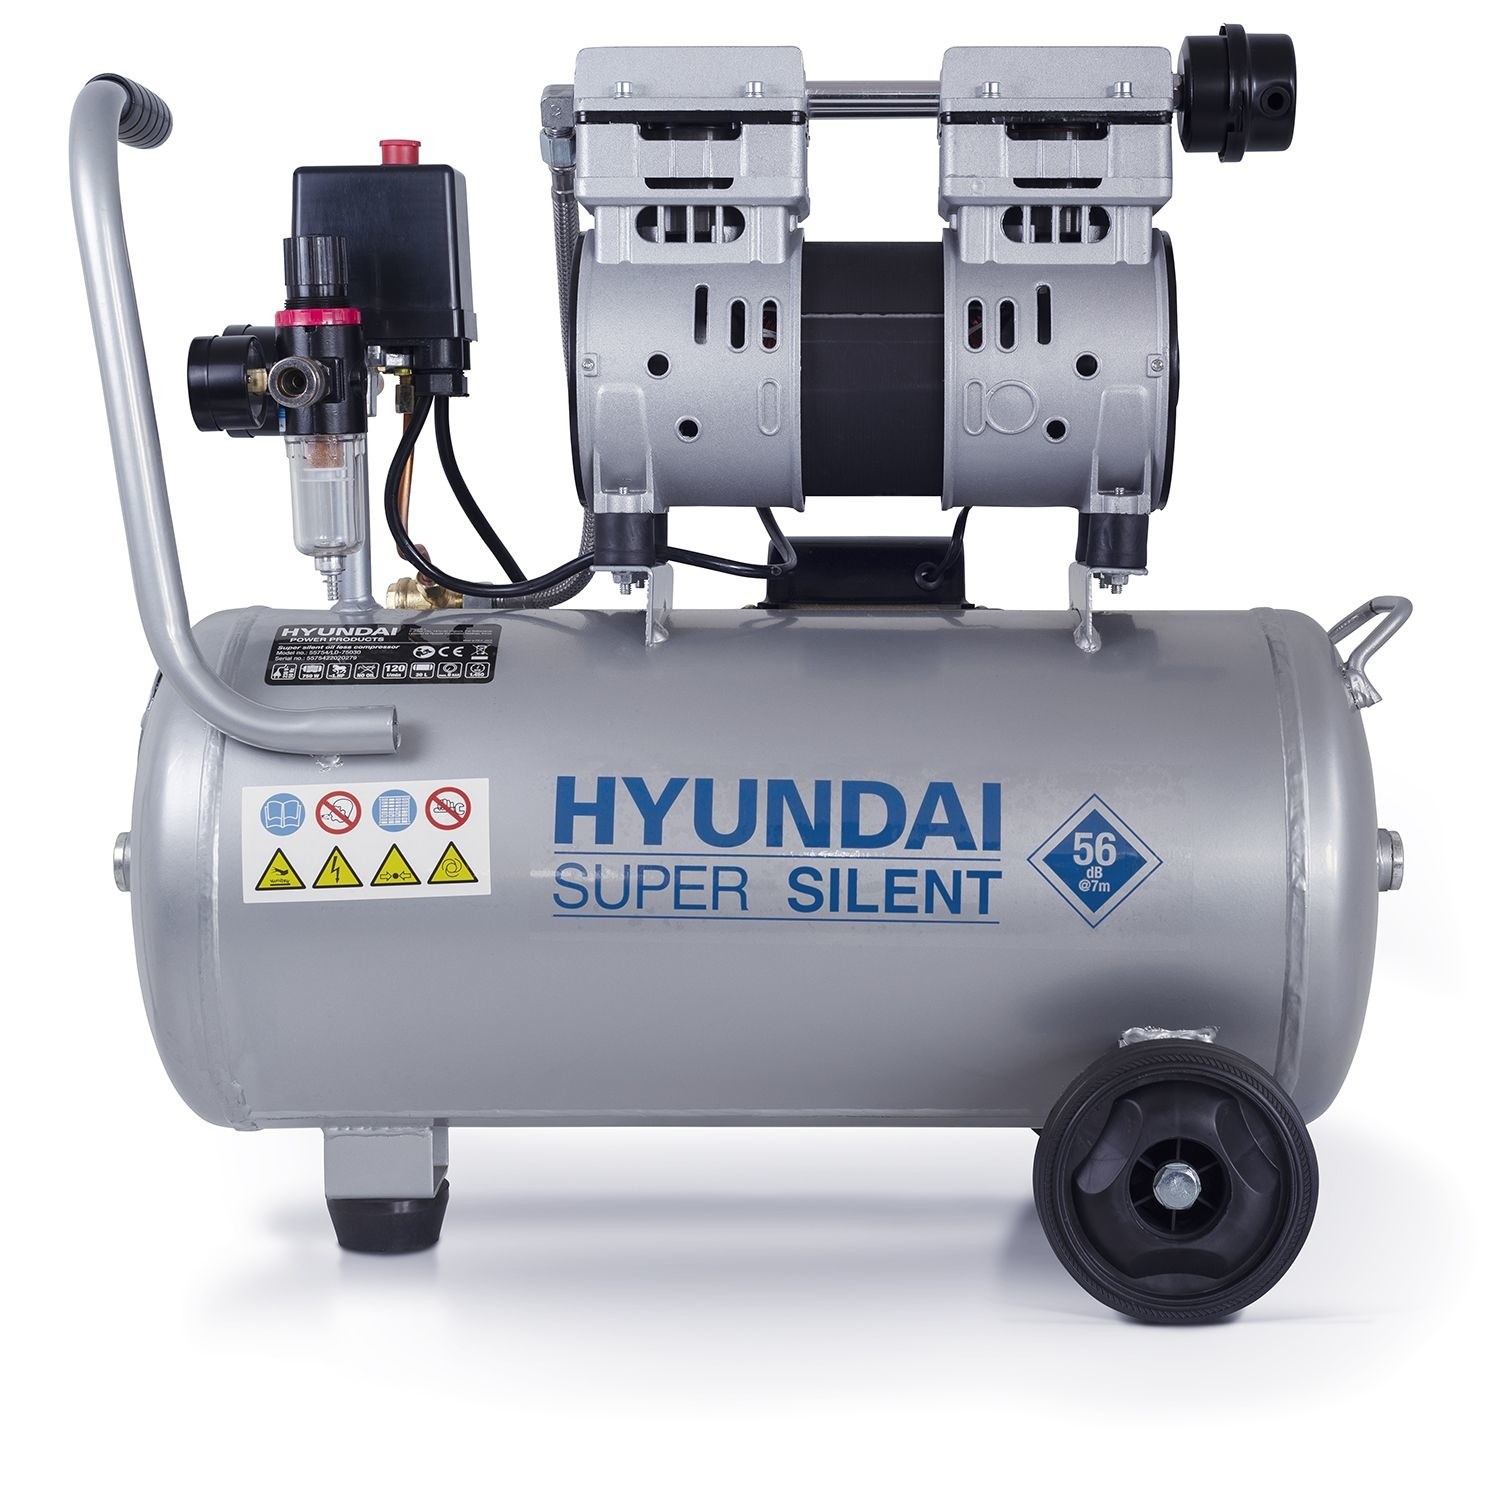 Snor bouwen club Hyundai Geluidsarme Compressor 30 Liter | Morgen in huis - HoukemaTools